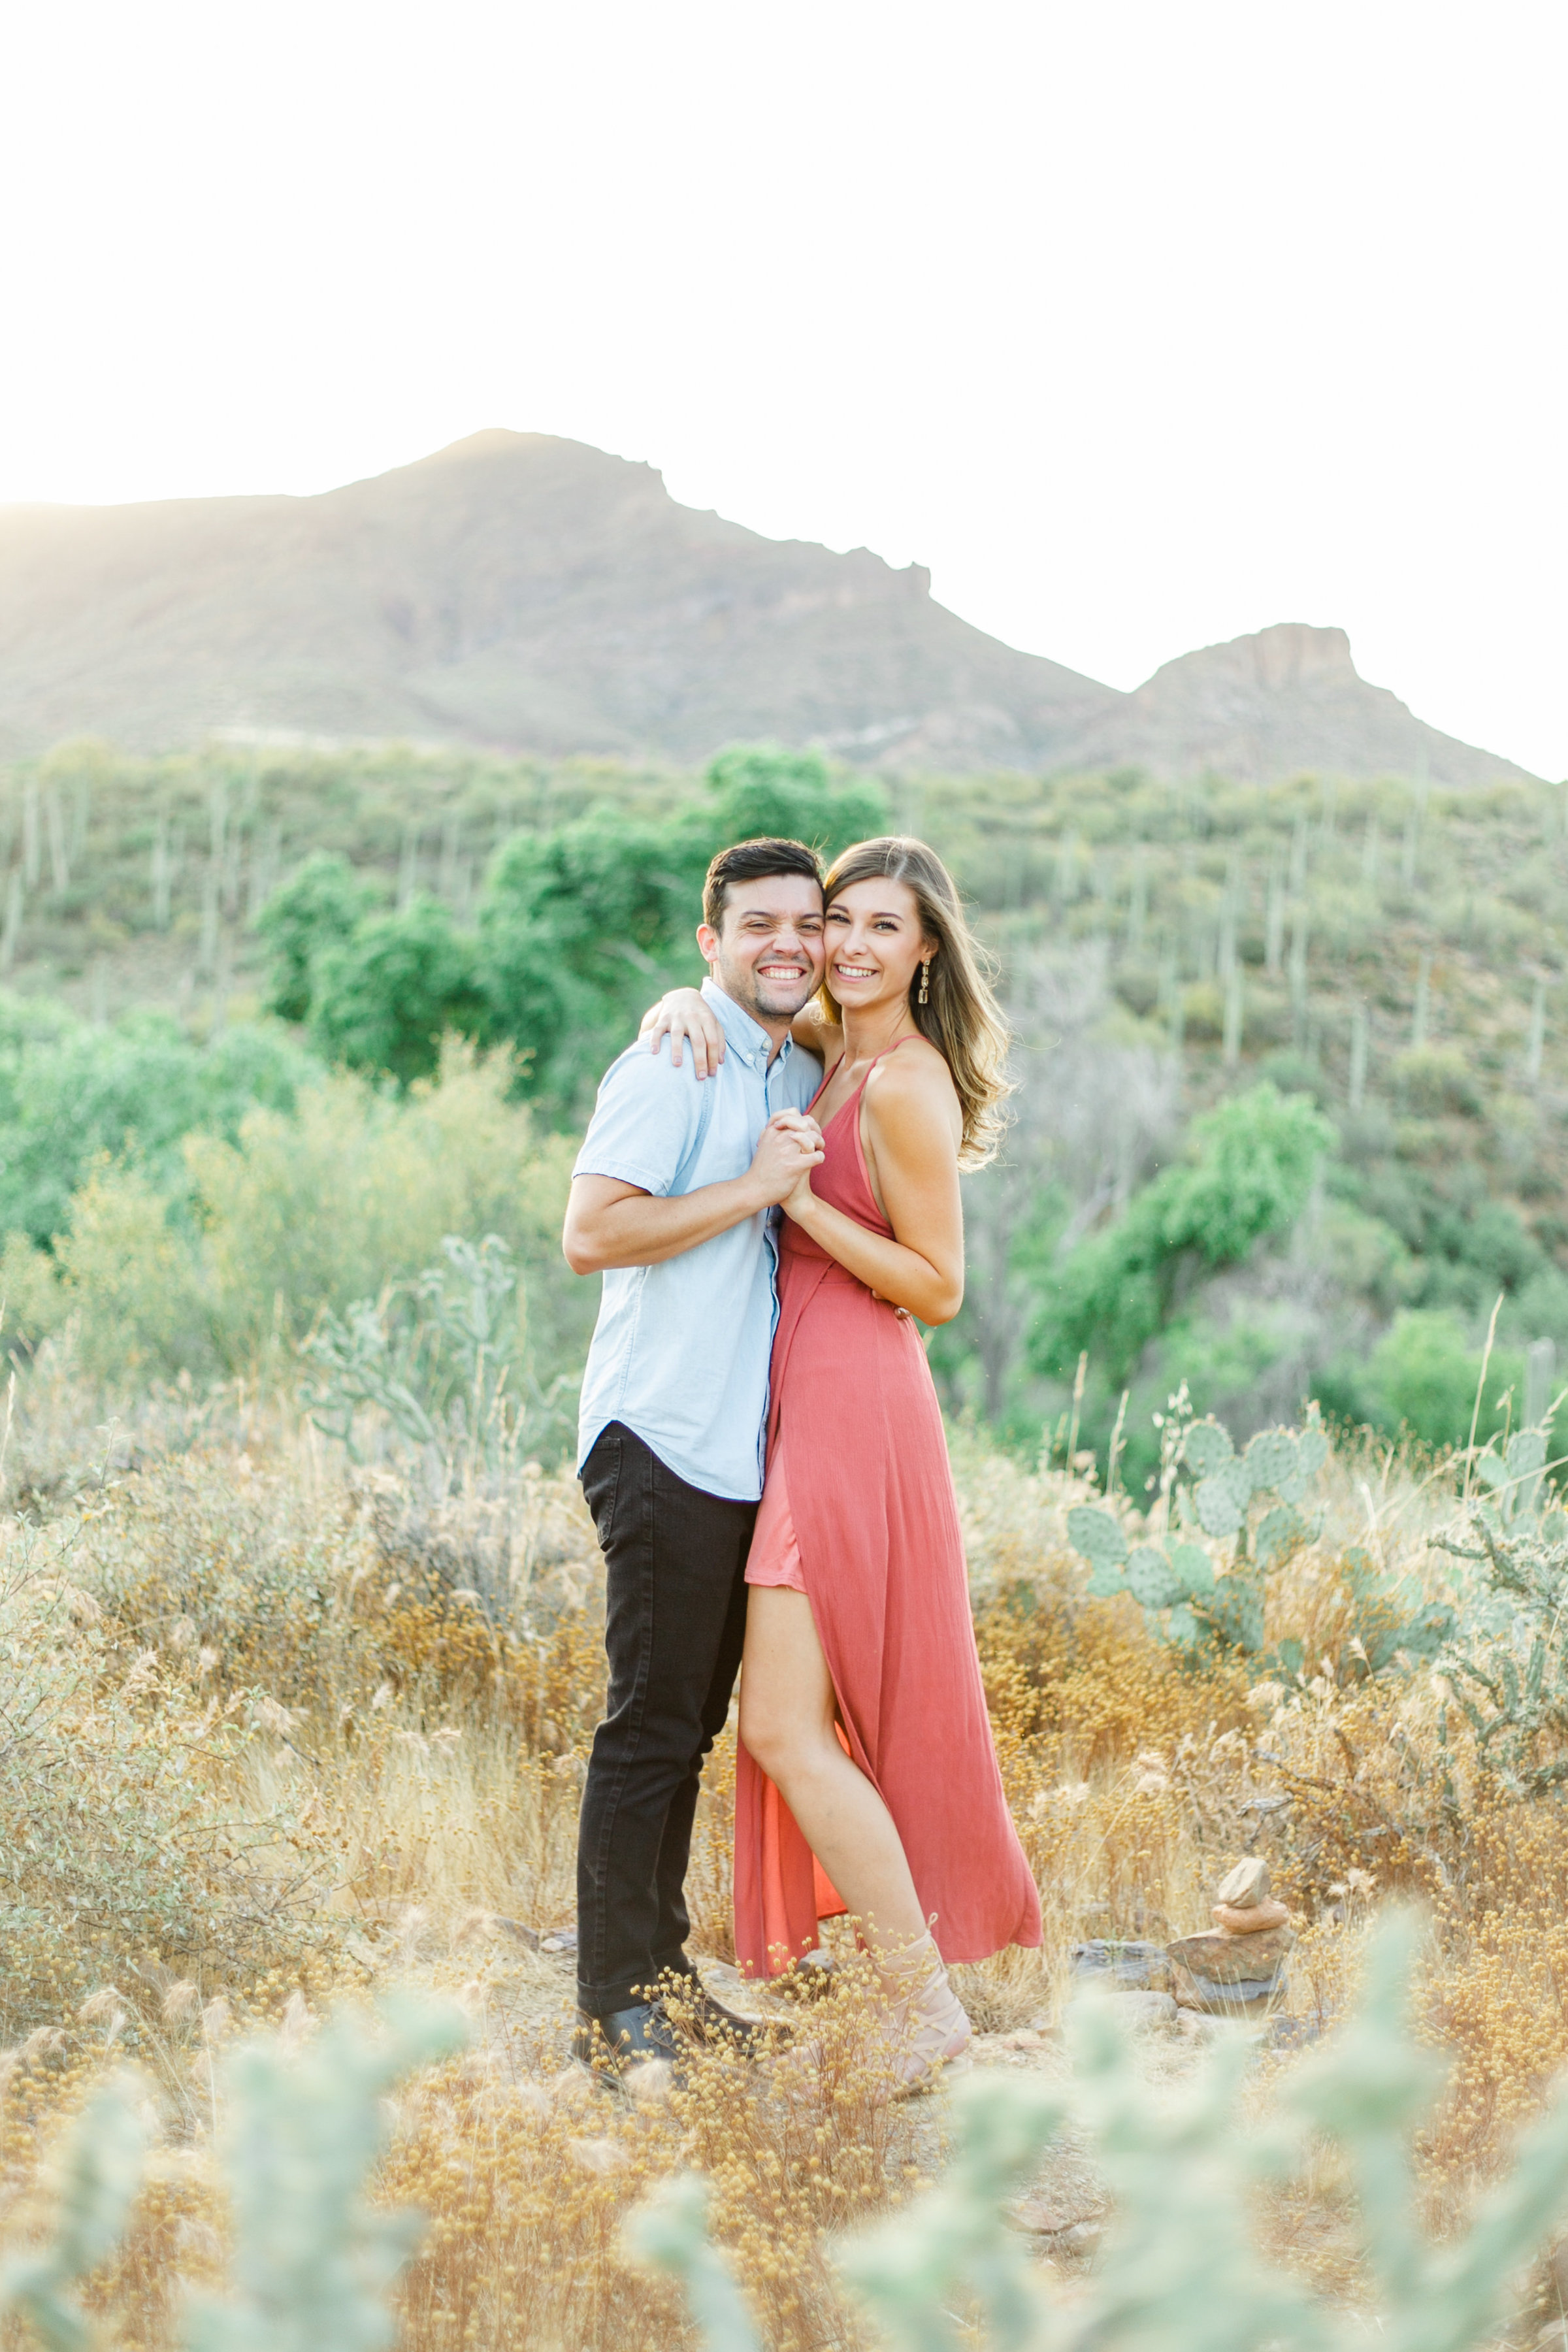 Karlie Colleen Photography - Arizona Desert Engagement - Brynne & Josh -155